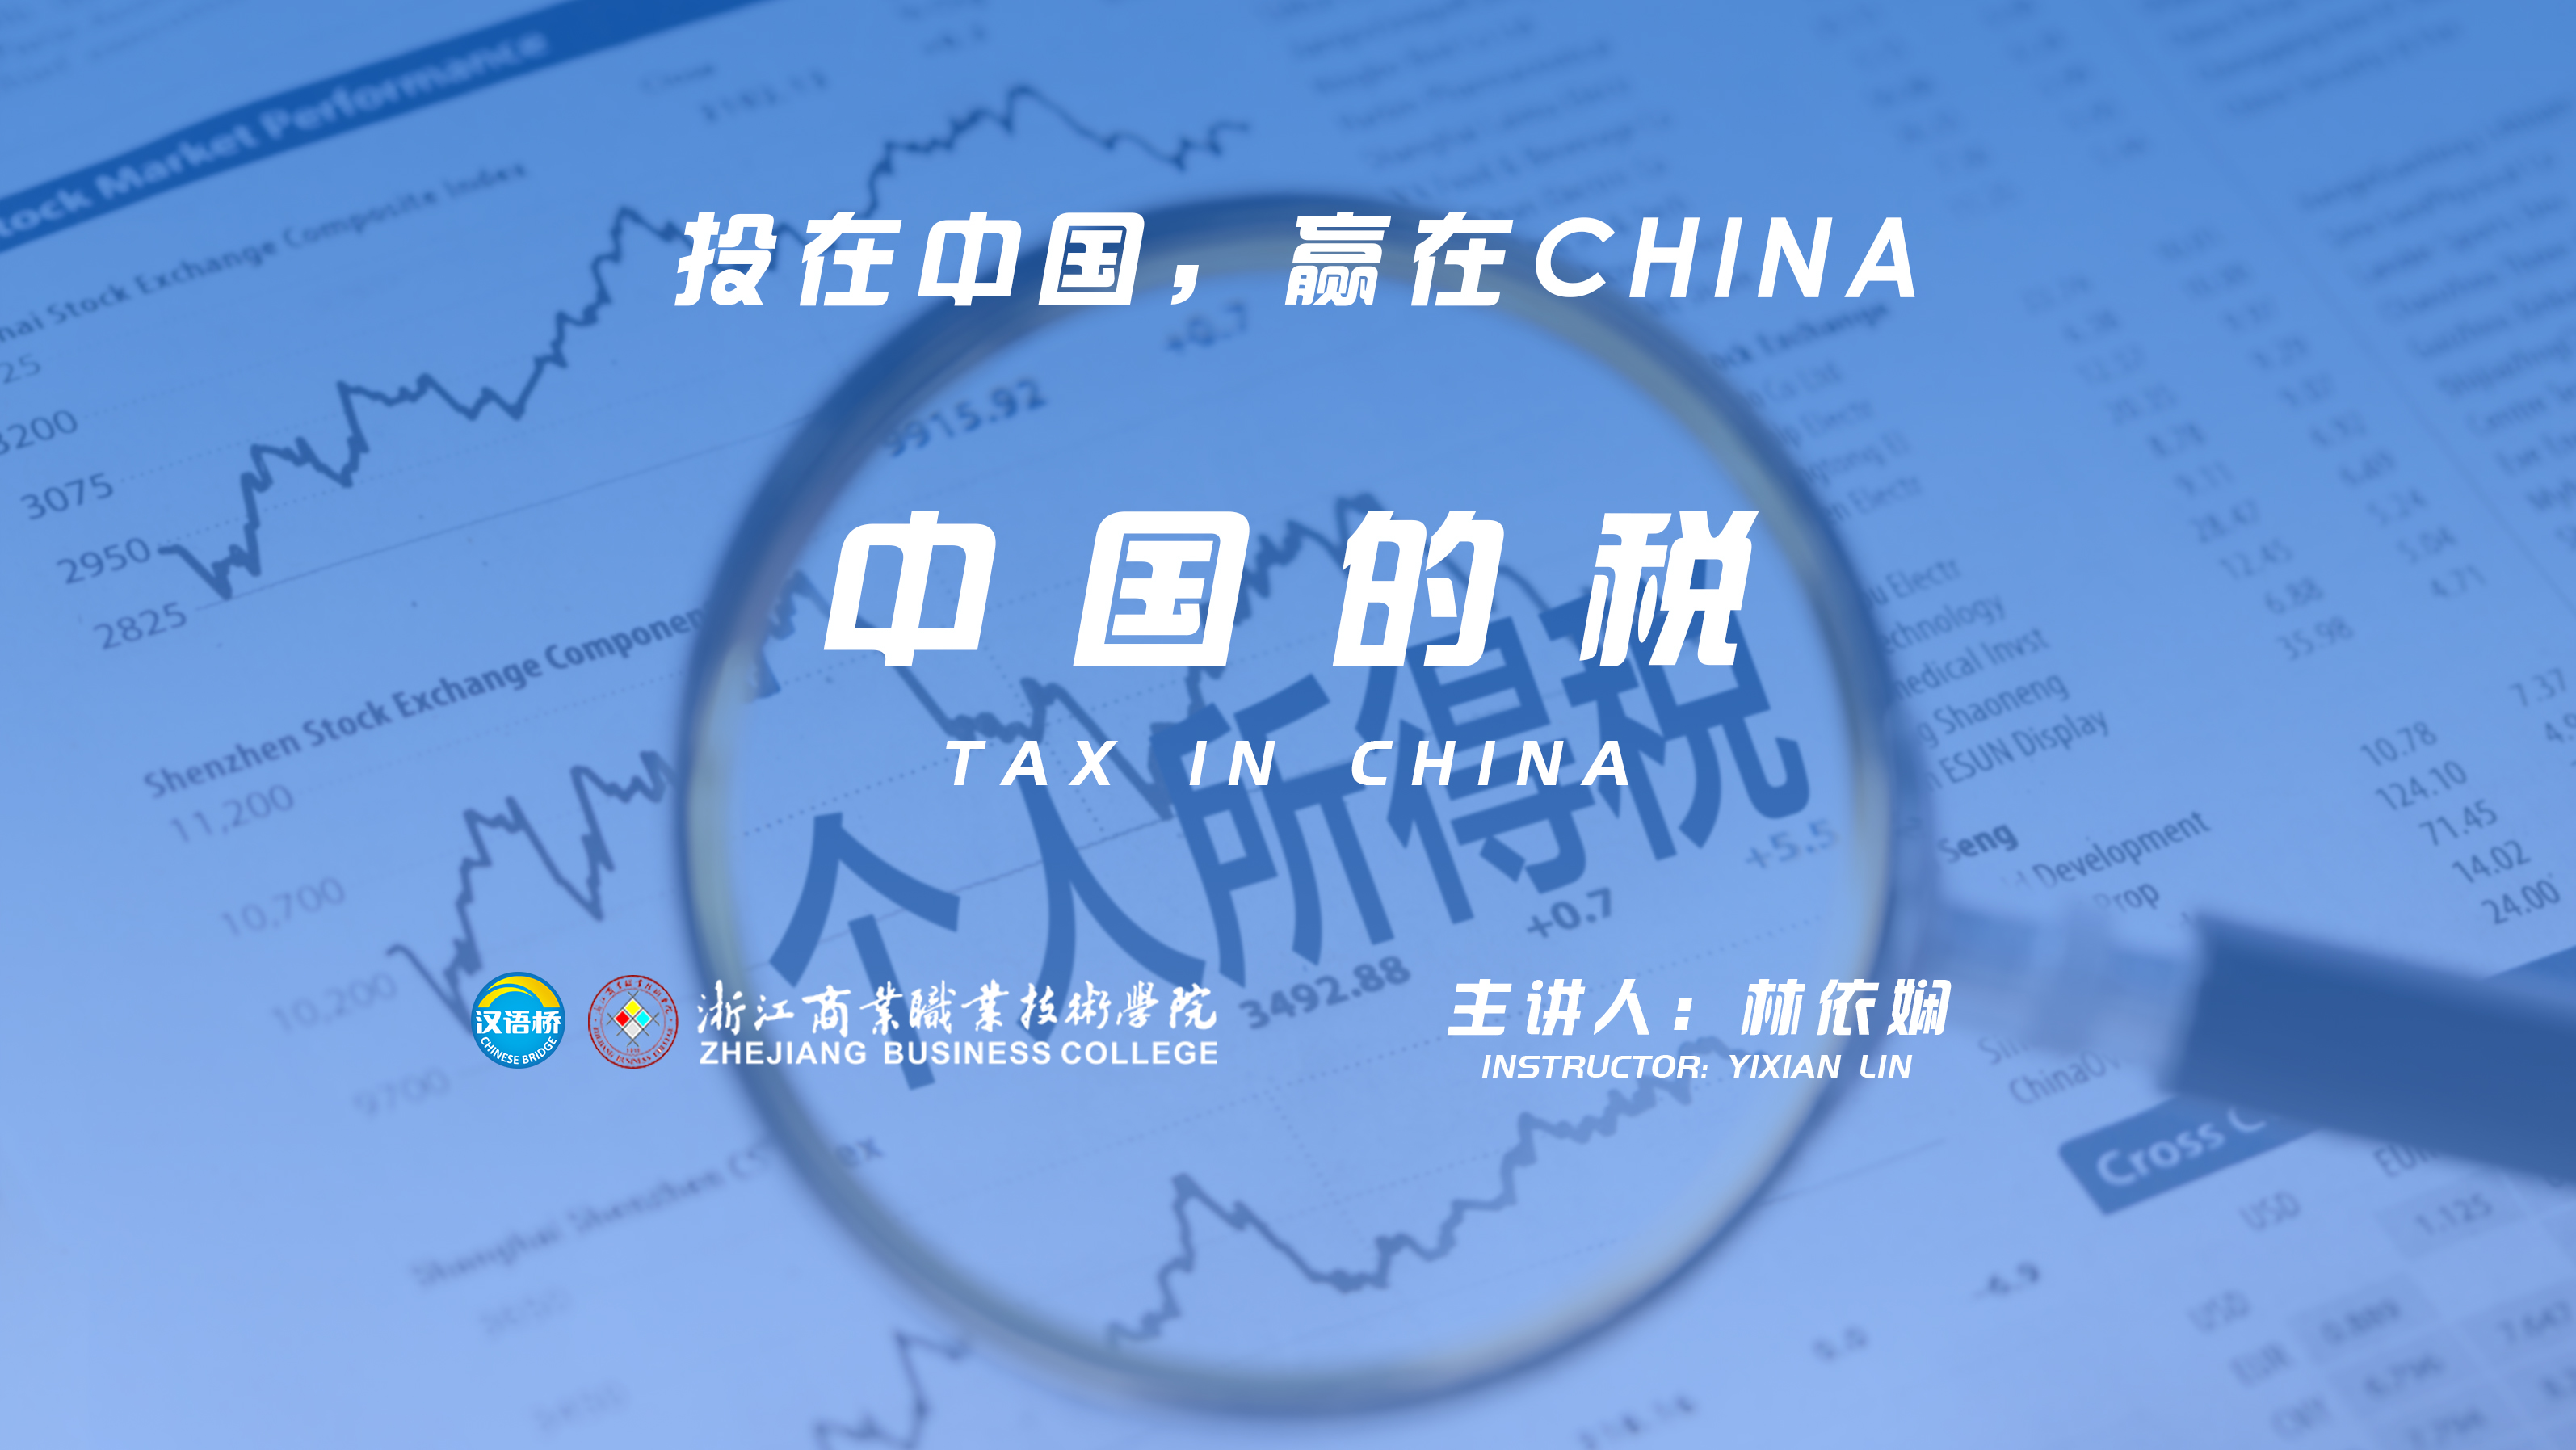 Tax in China